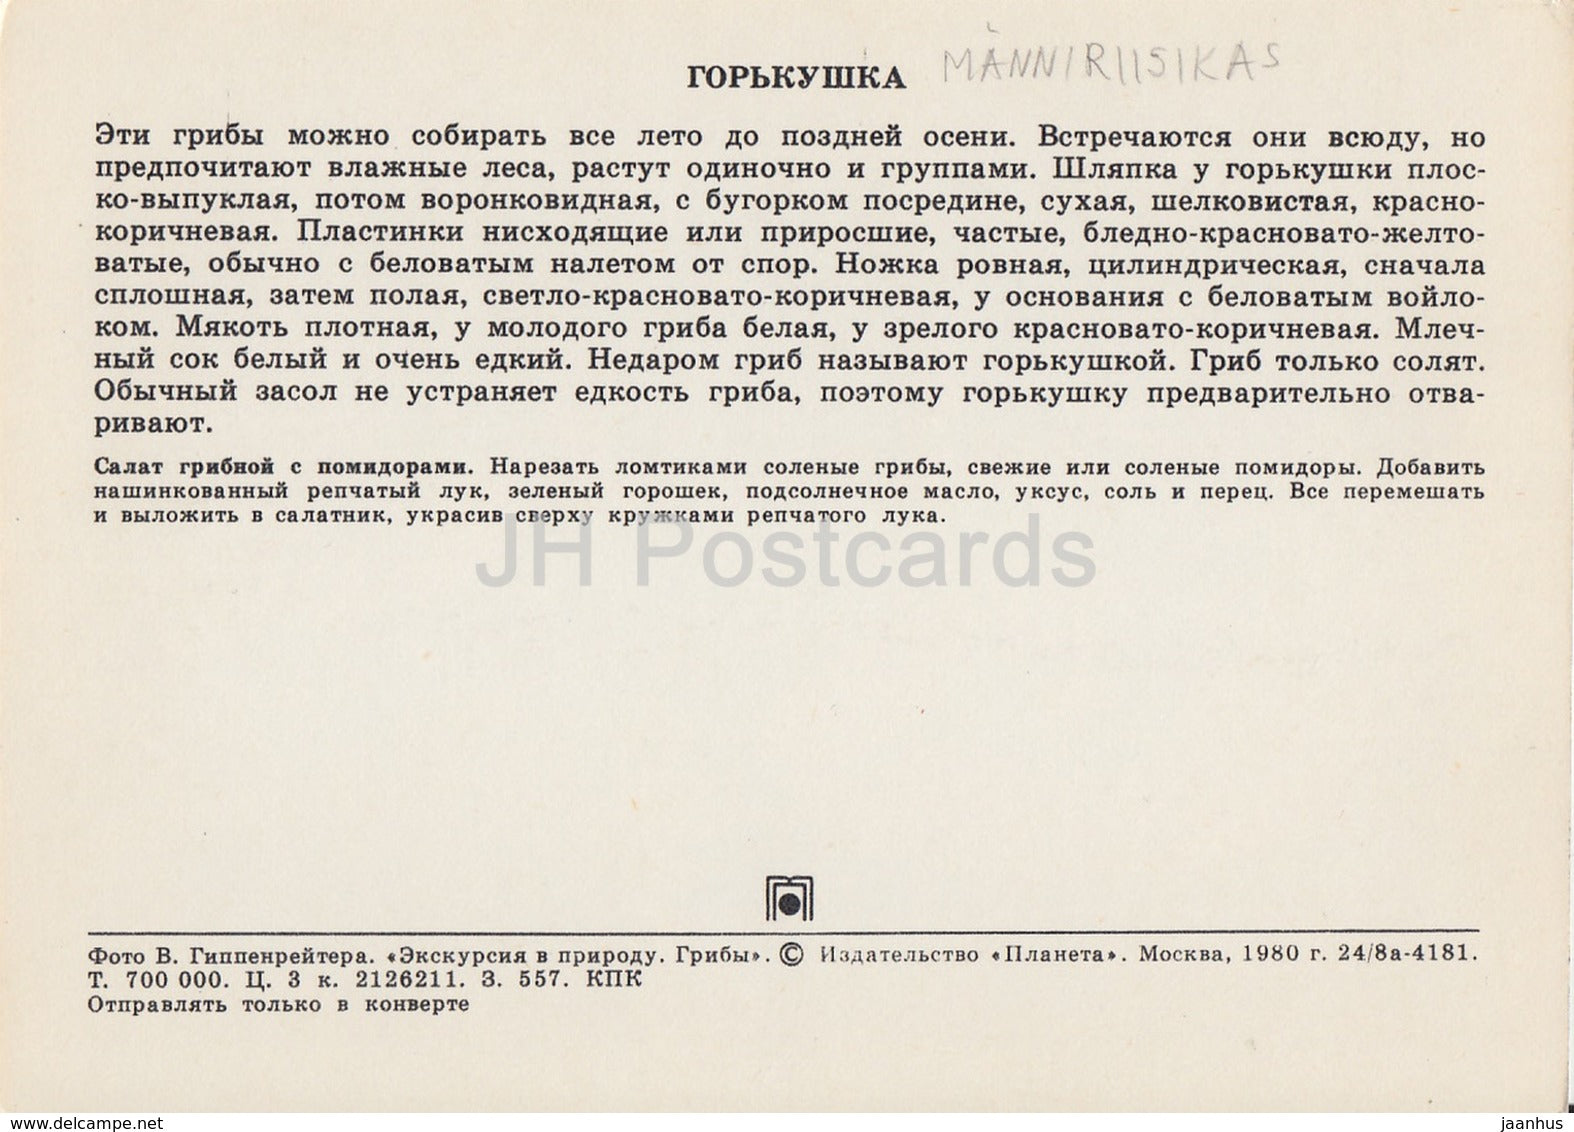 Rufous Milkcap Mushroom - Lactarius rufus - Mushrooms - 1980 - Russia USSR - unused - JH Postcards